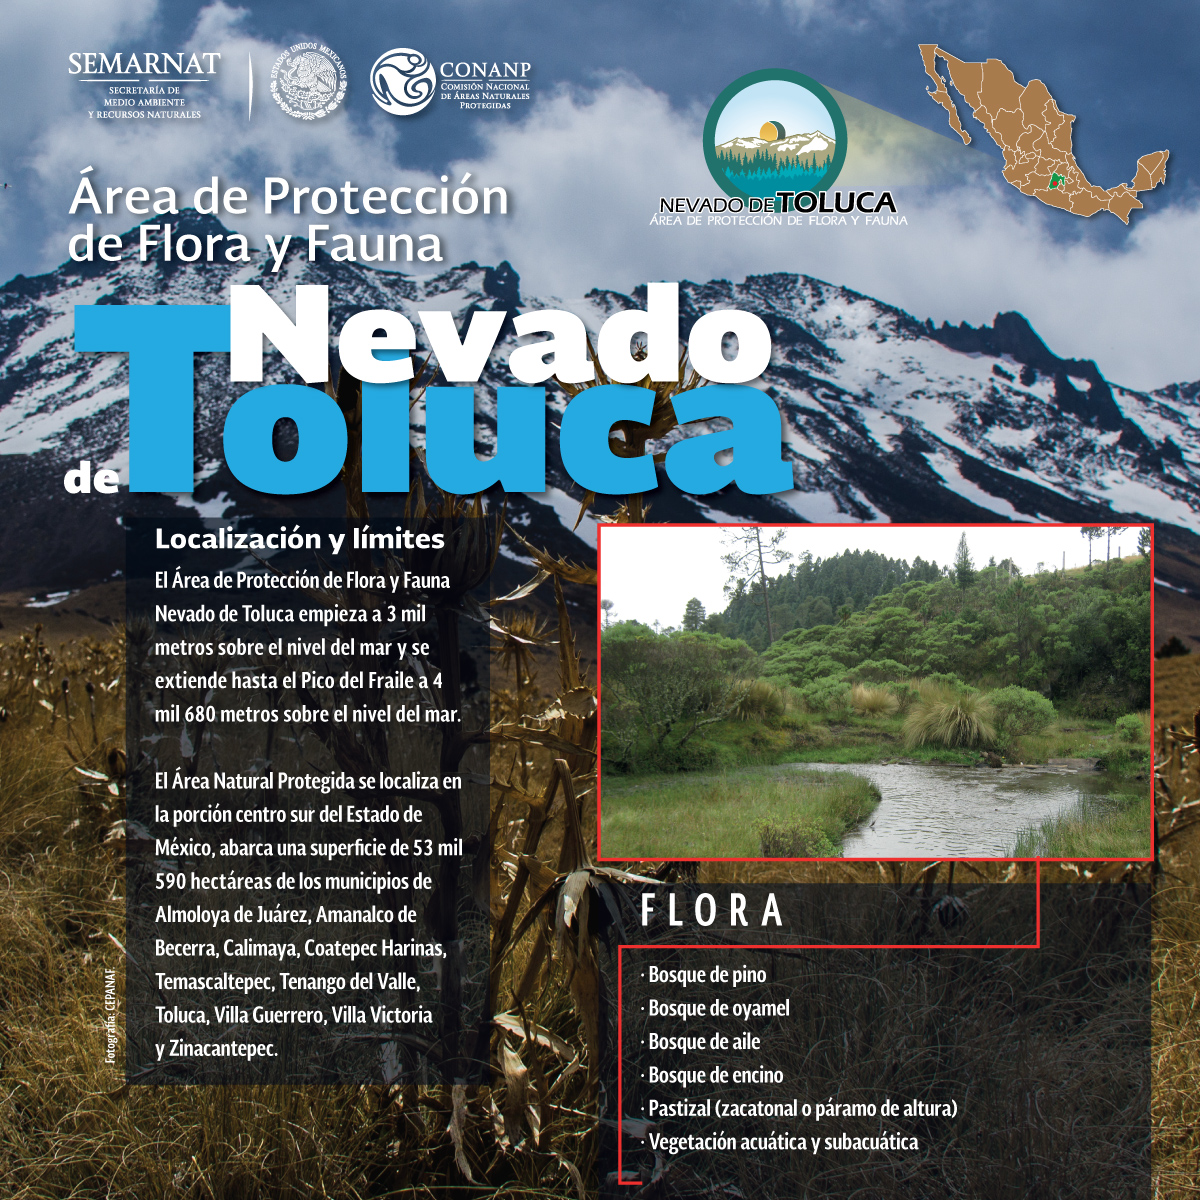 /cms/uploads/image/file/220734/infografia-NEVADO-DE-TOLUCA_flora-168x118.5-_50__.jpg